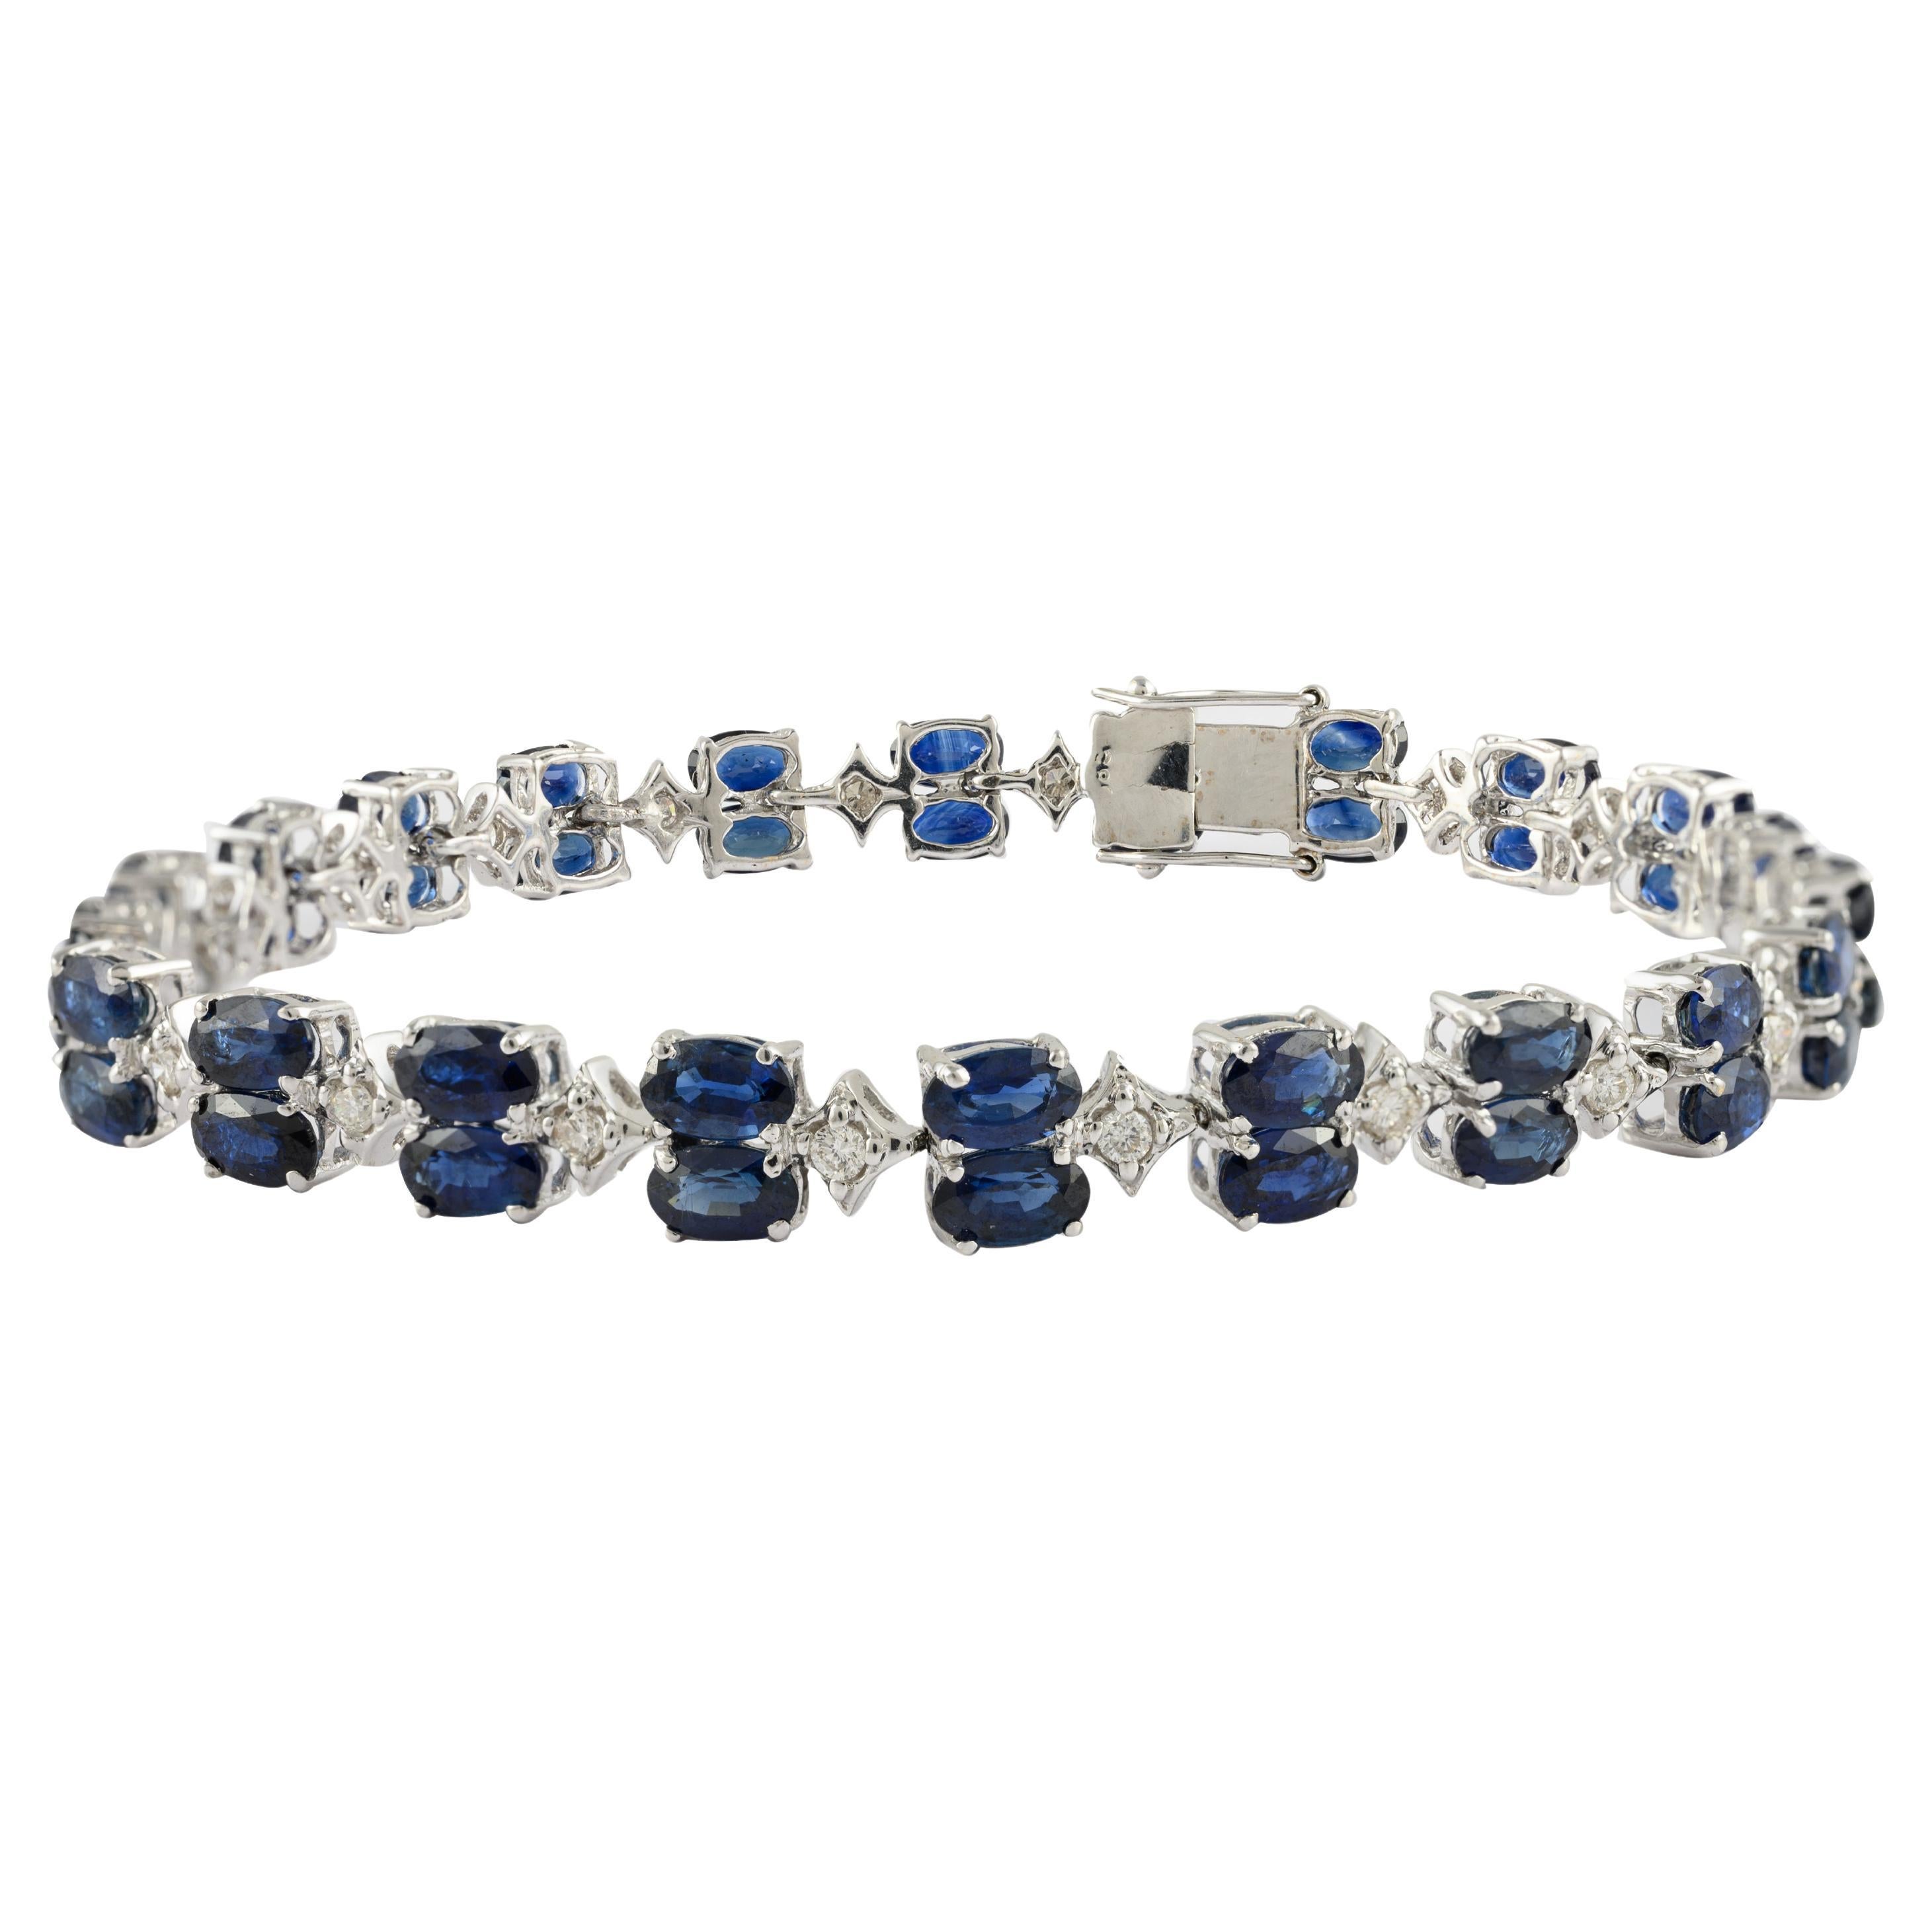 14.37 Carat Blue Sapphire Diamond 14k Solid White Gold Wedding Bracelet